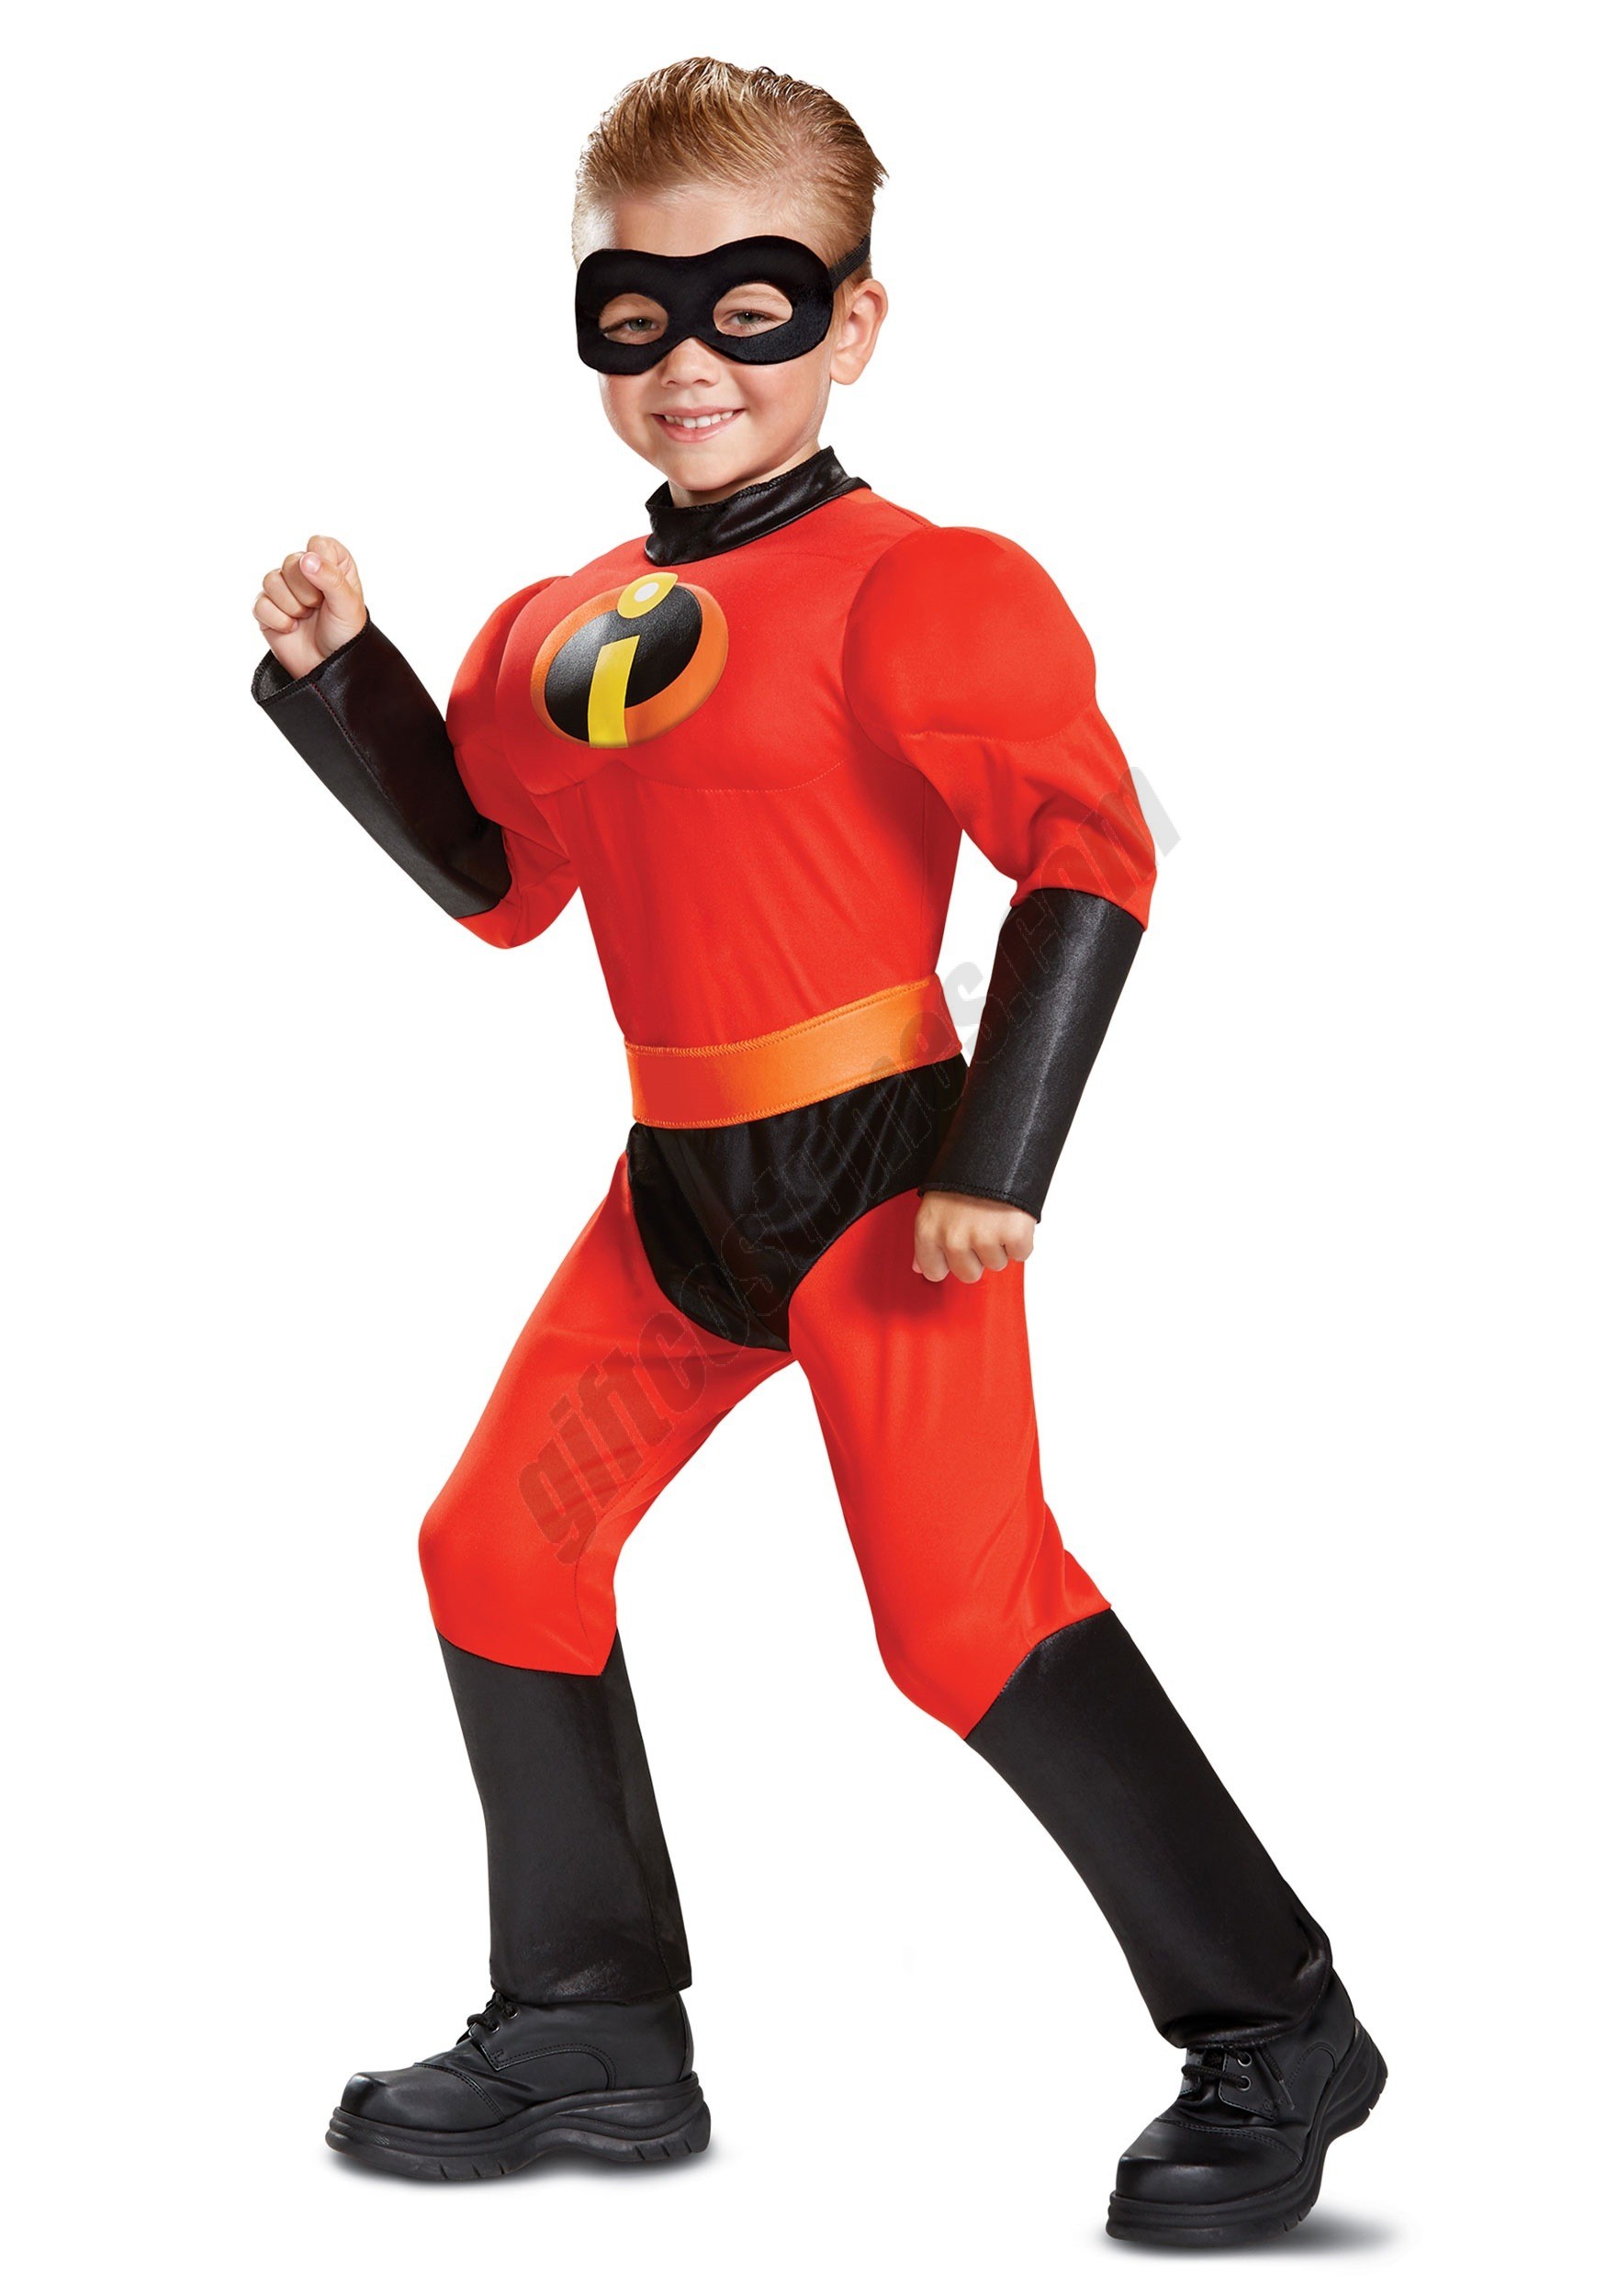 Disney Incredibles 2 Classic Dash Muscle Toddler Costume Promotions - Disney Incredibles 2 Classic Dash Muscle Toddler Costume Promotions